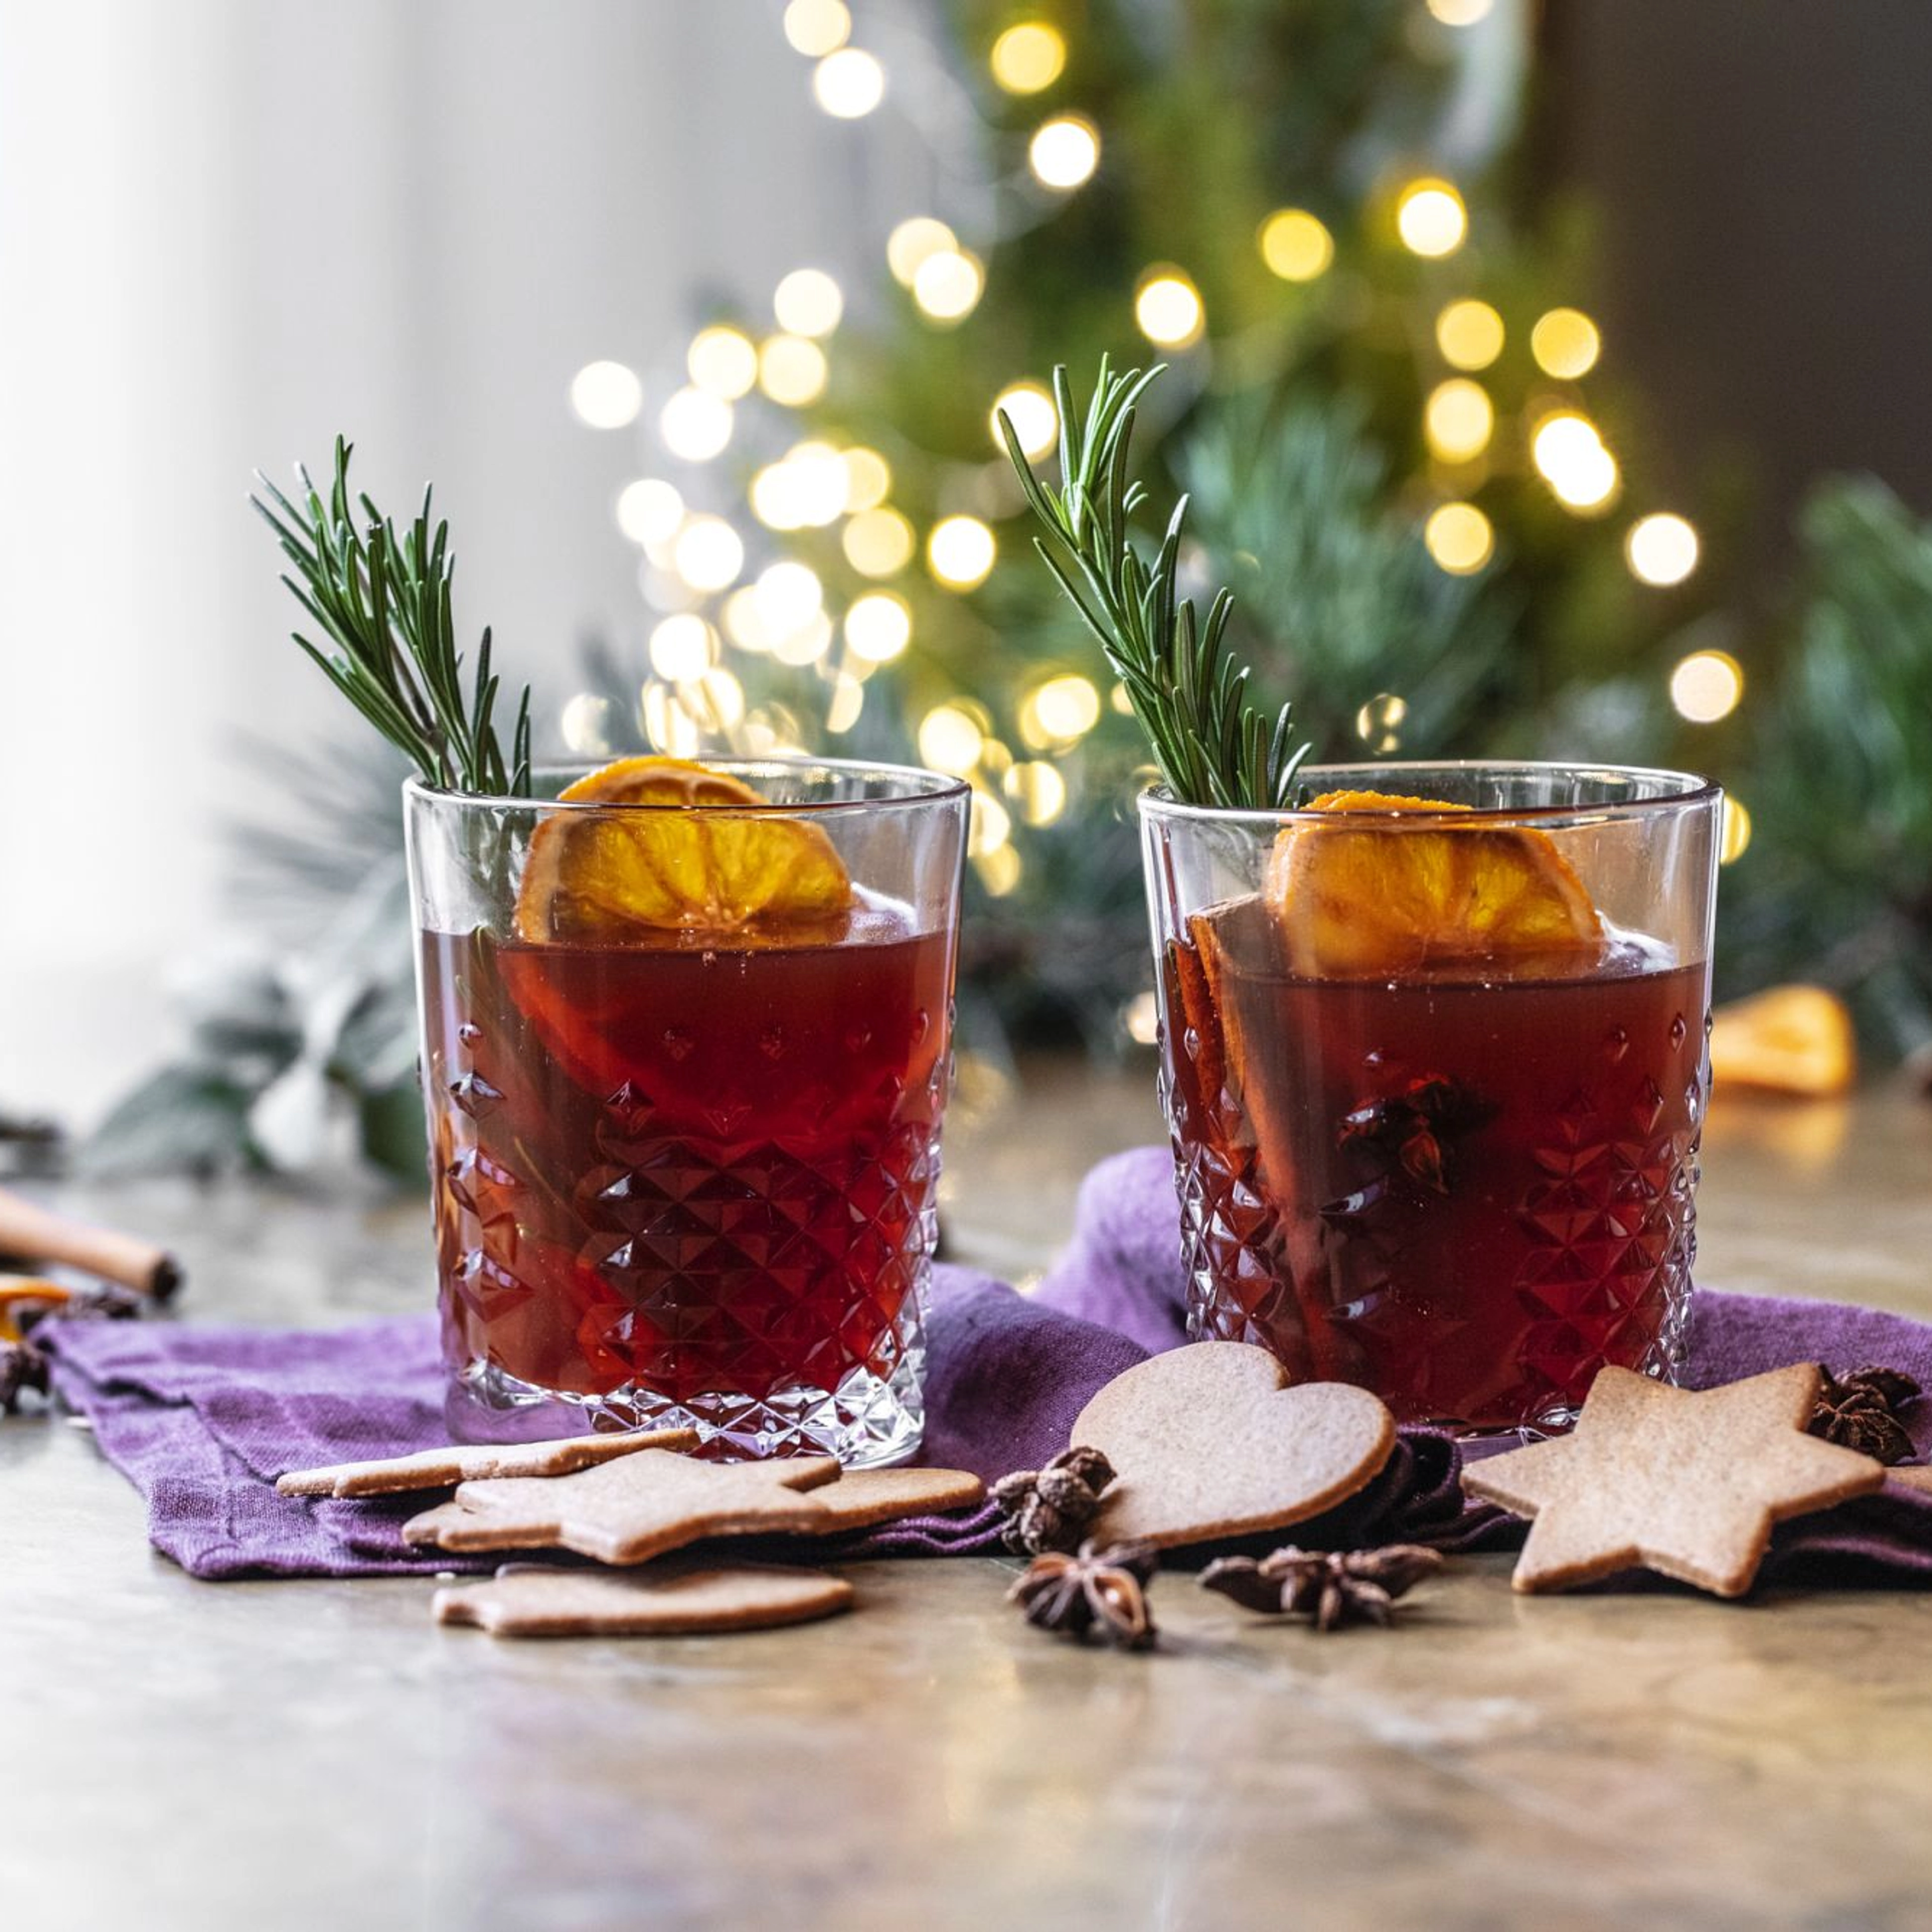 Christmas drinks - Norway